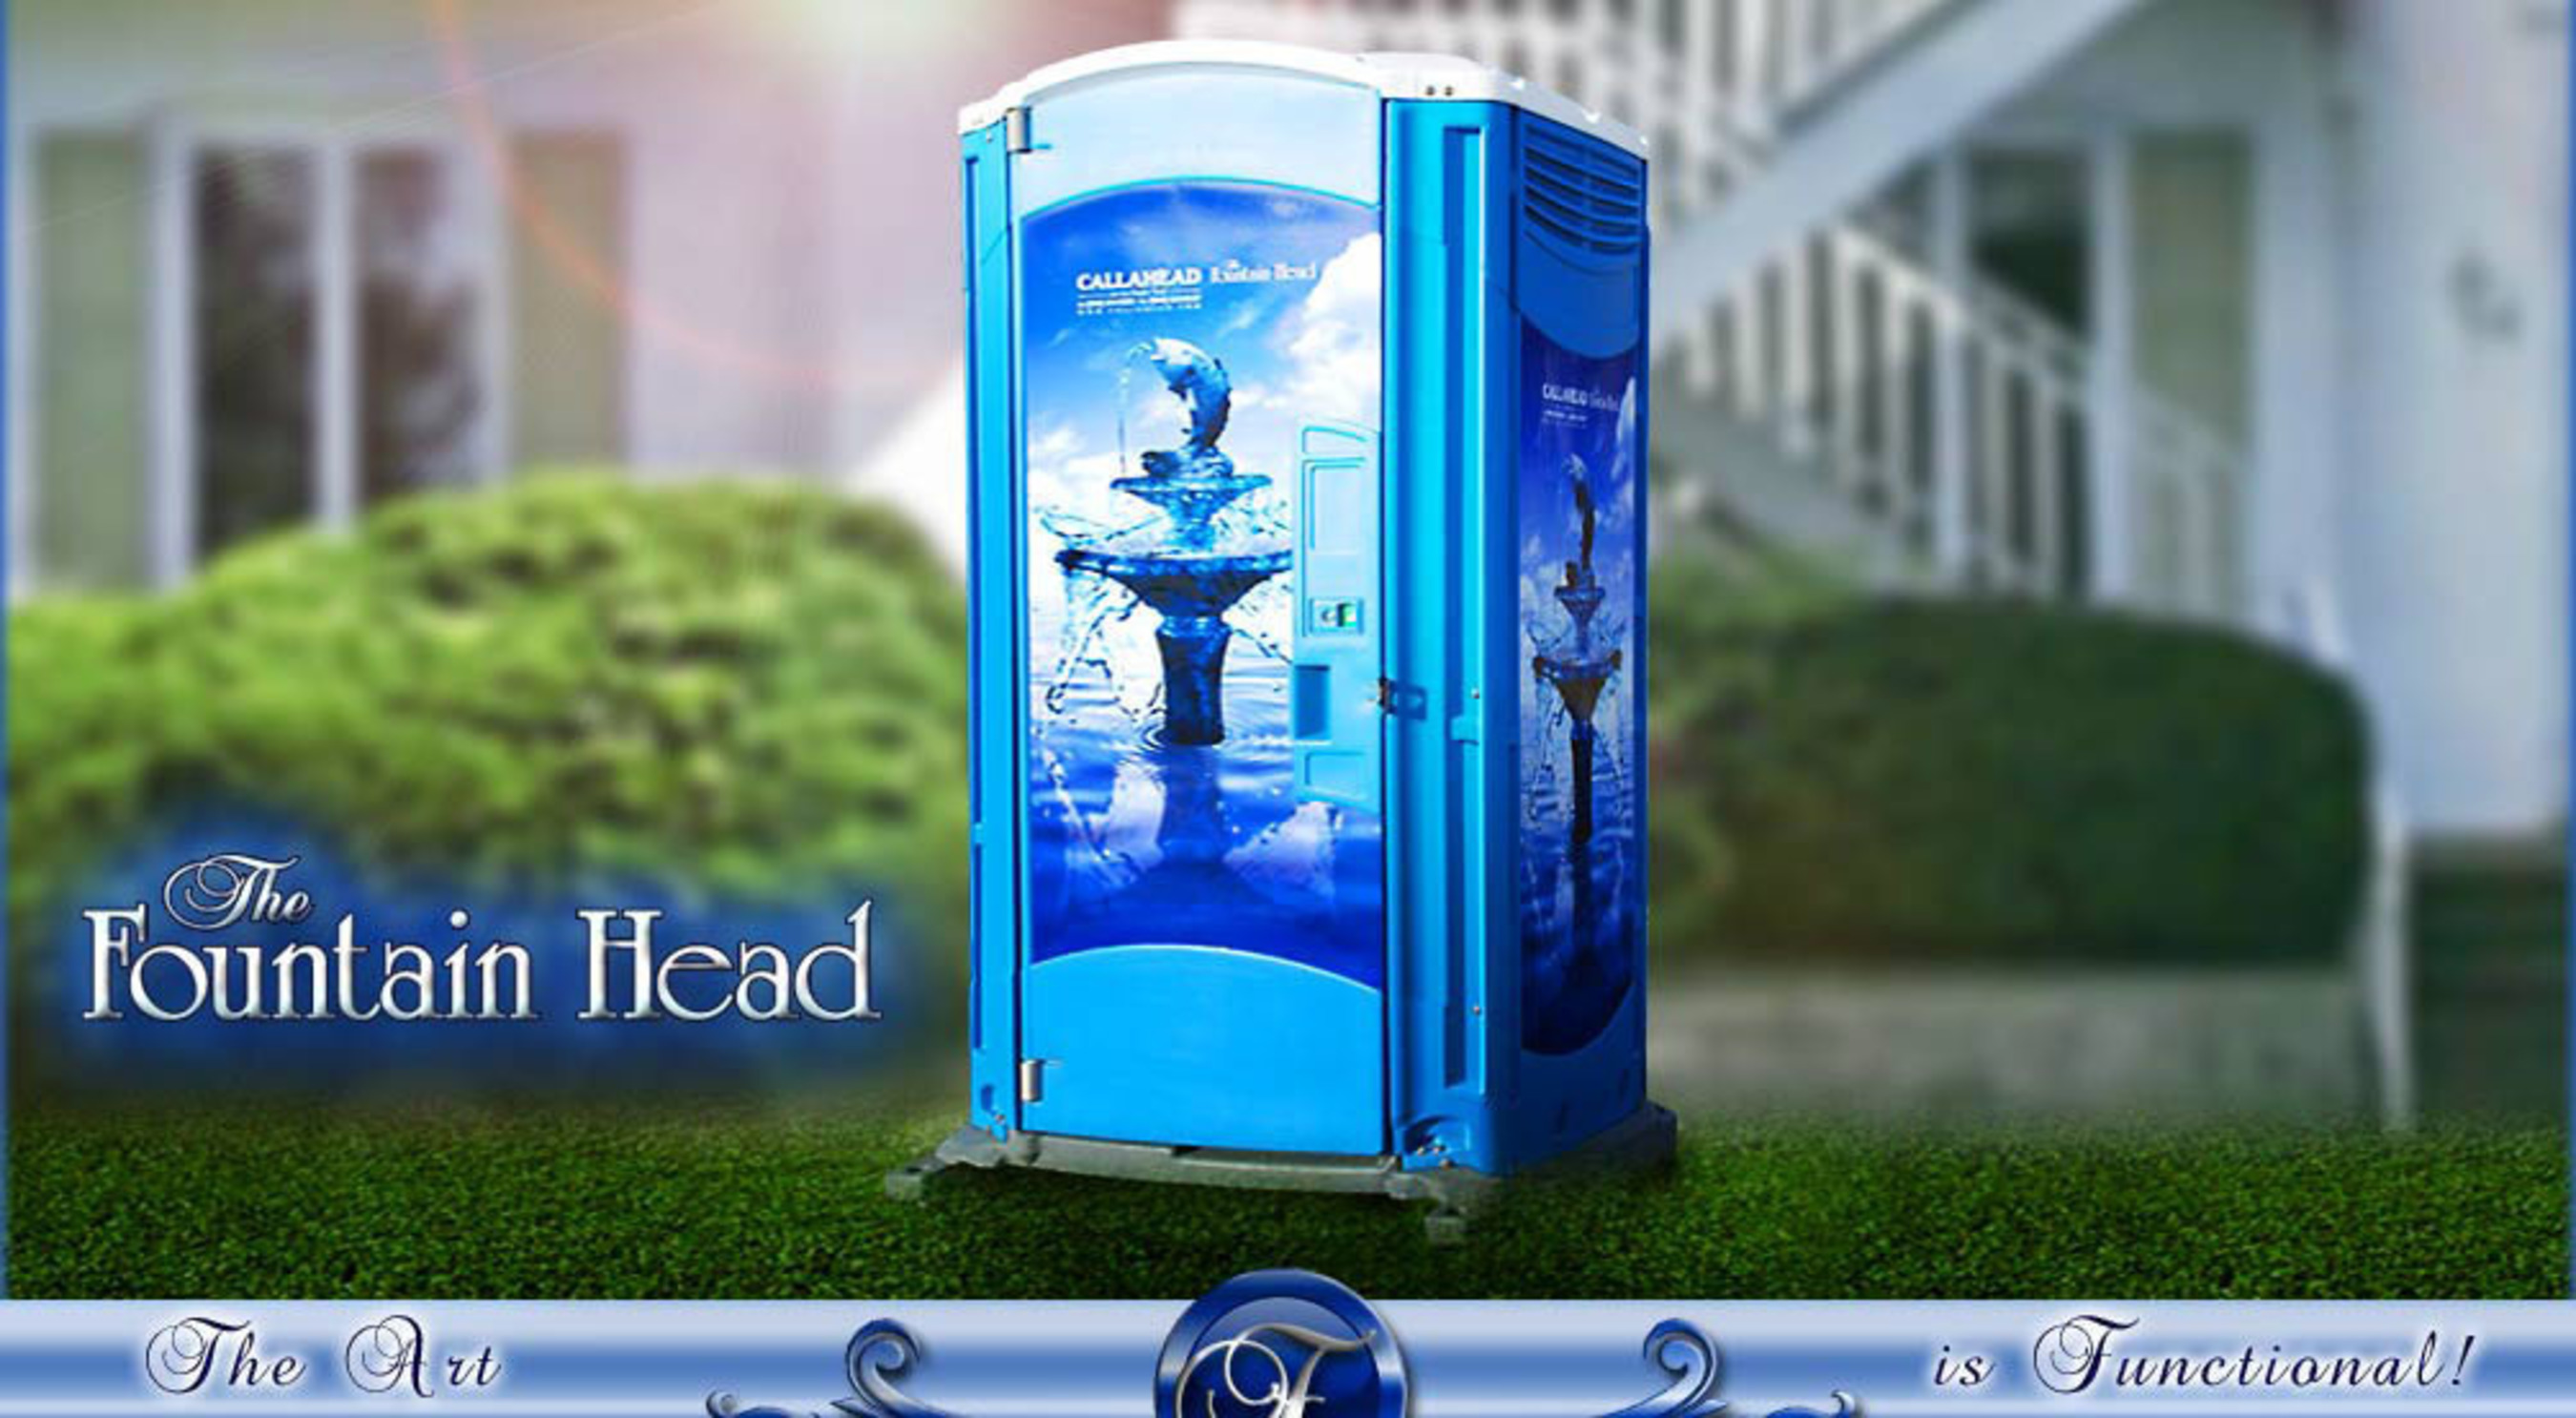 The Fountain Head Portable Toilet by CALLAHEAD. (PRNewsFoto/CALLAHEAD) (PRNewsFoto/CALLAHEAD)